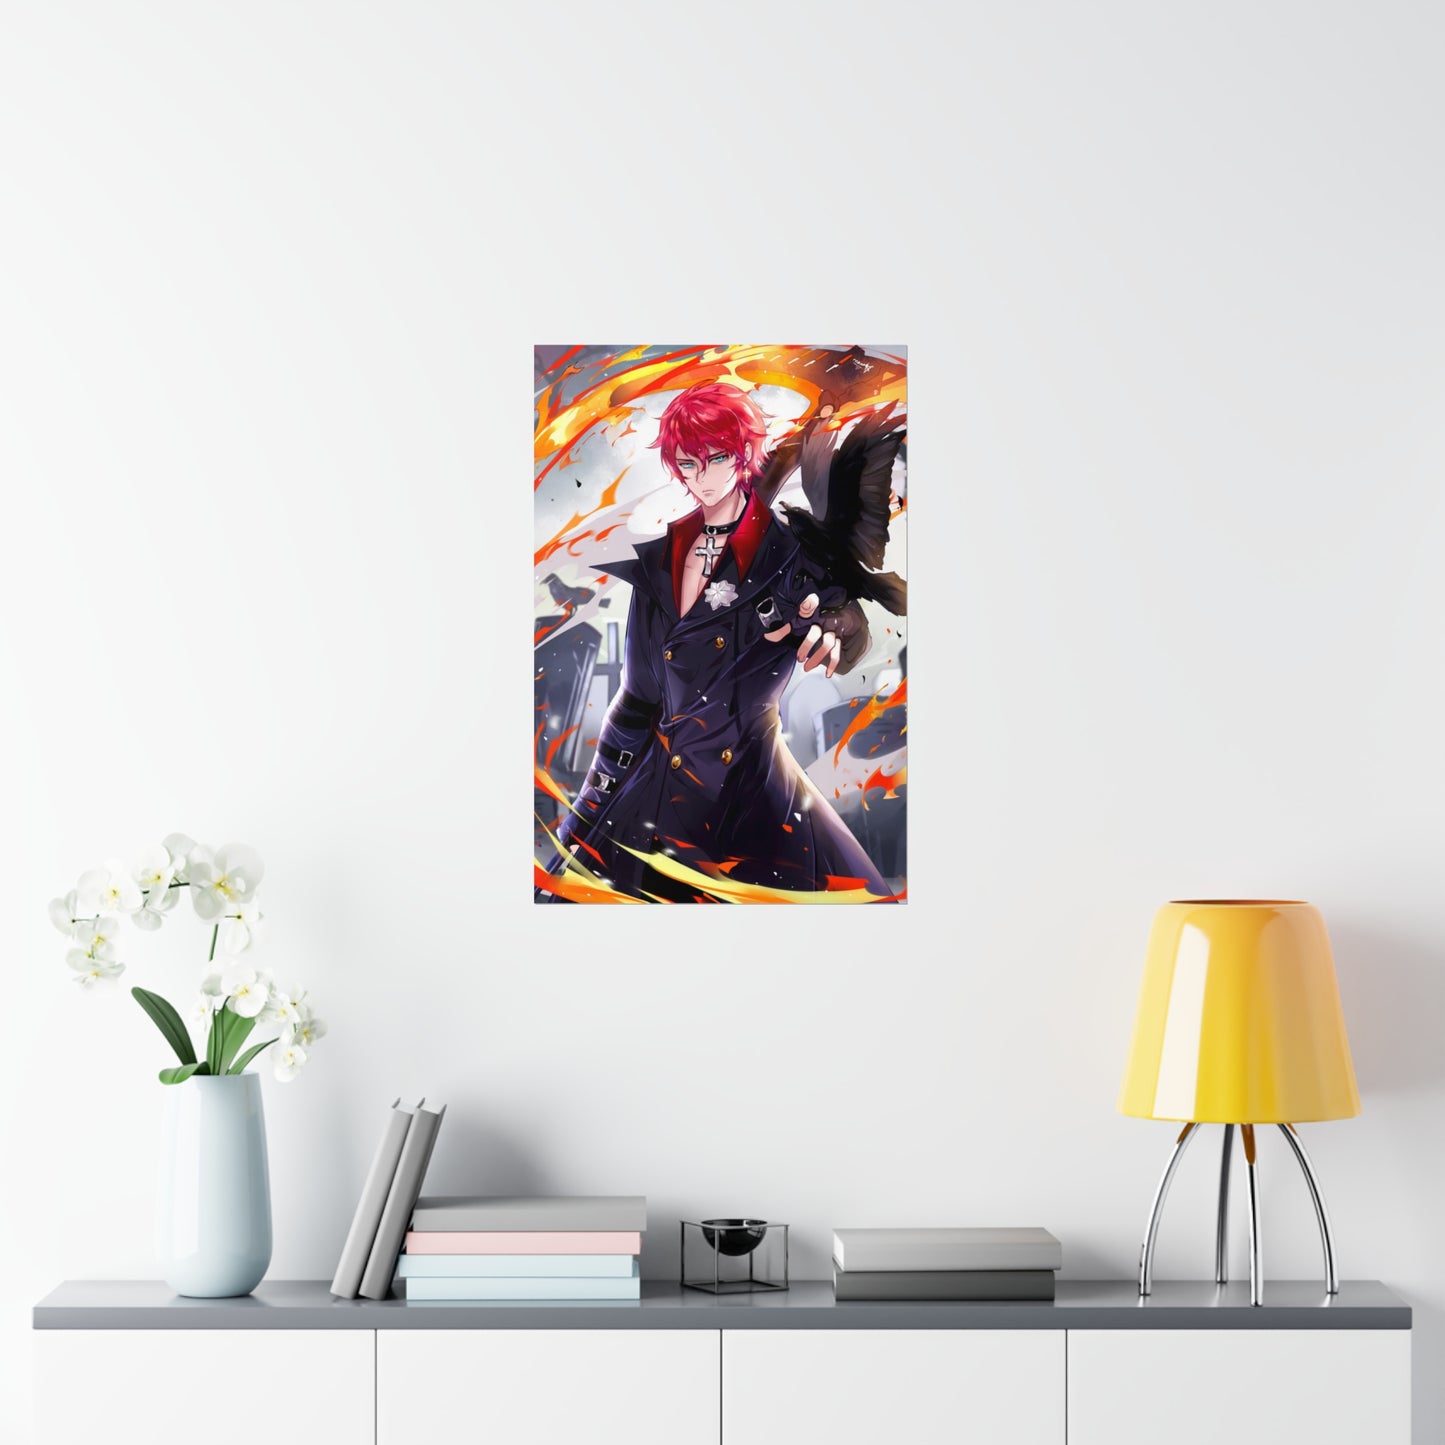 King Tower Of Fantasy Poster - Gaming Decor Wall Art - Premium Matte Vertical Poster